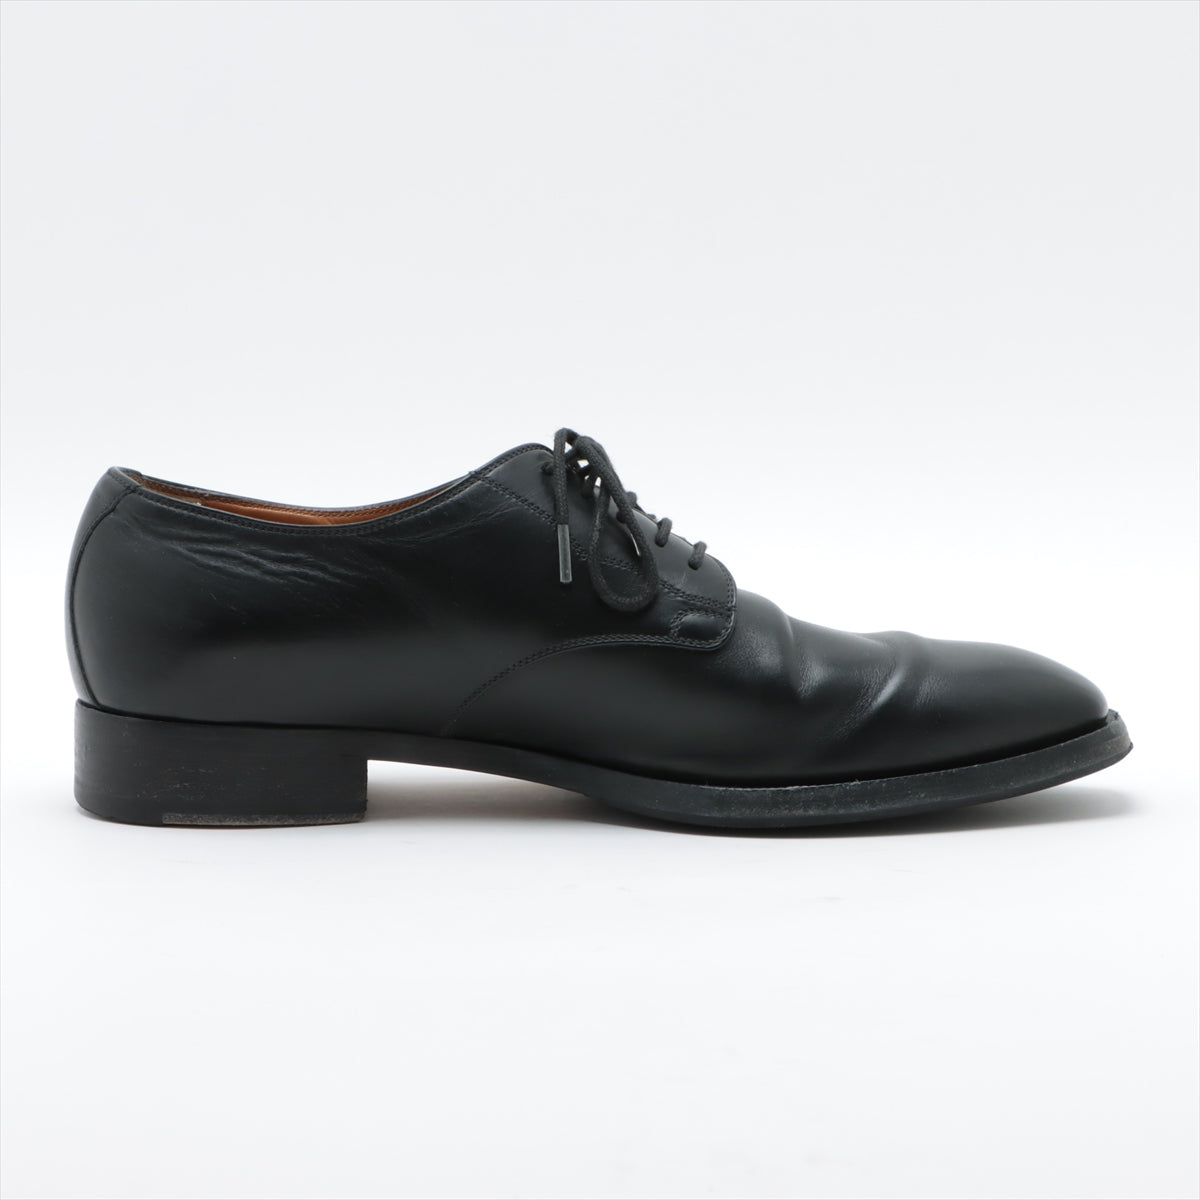 Gucci GG Marmont Leather Dress shoes 6 Men's Black 643621